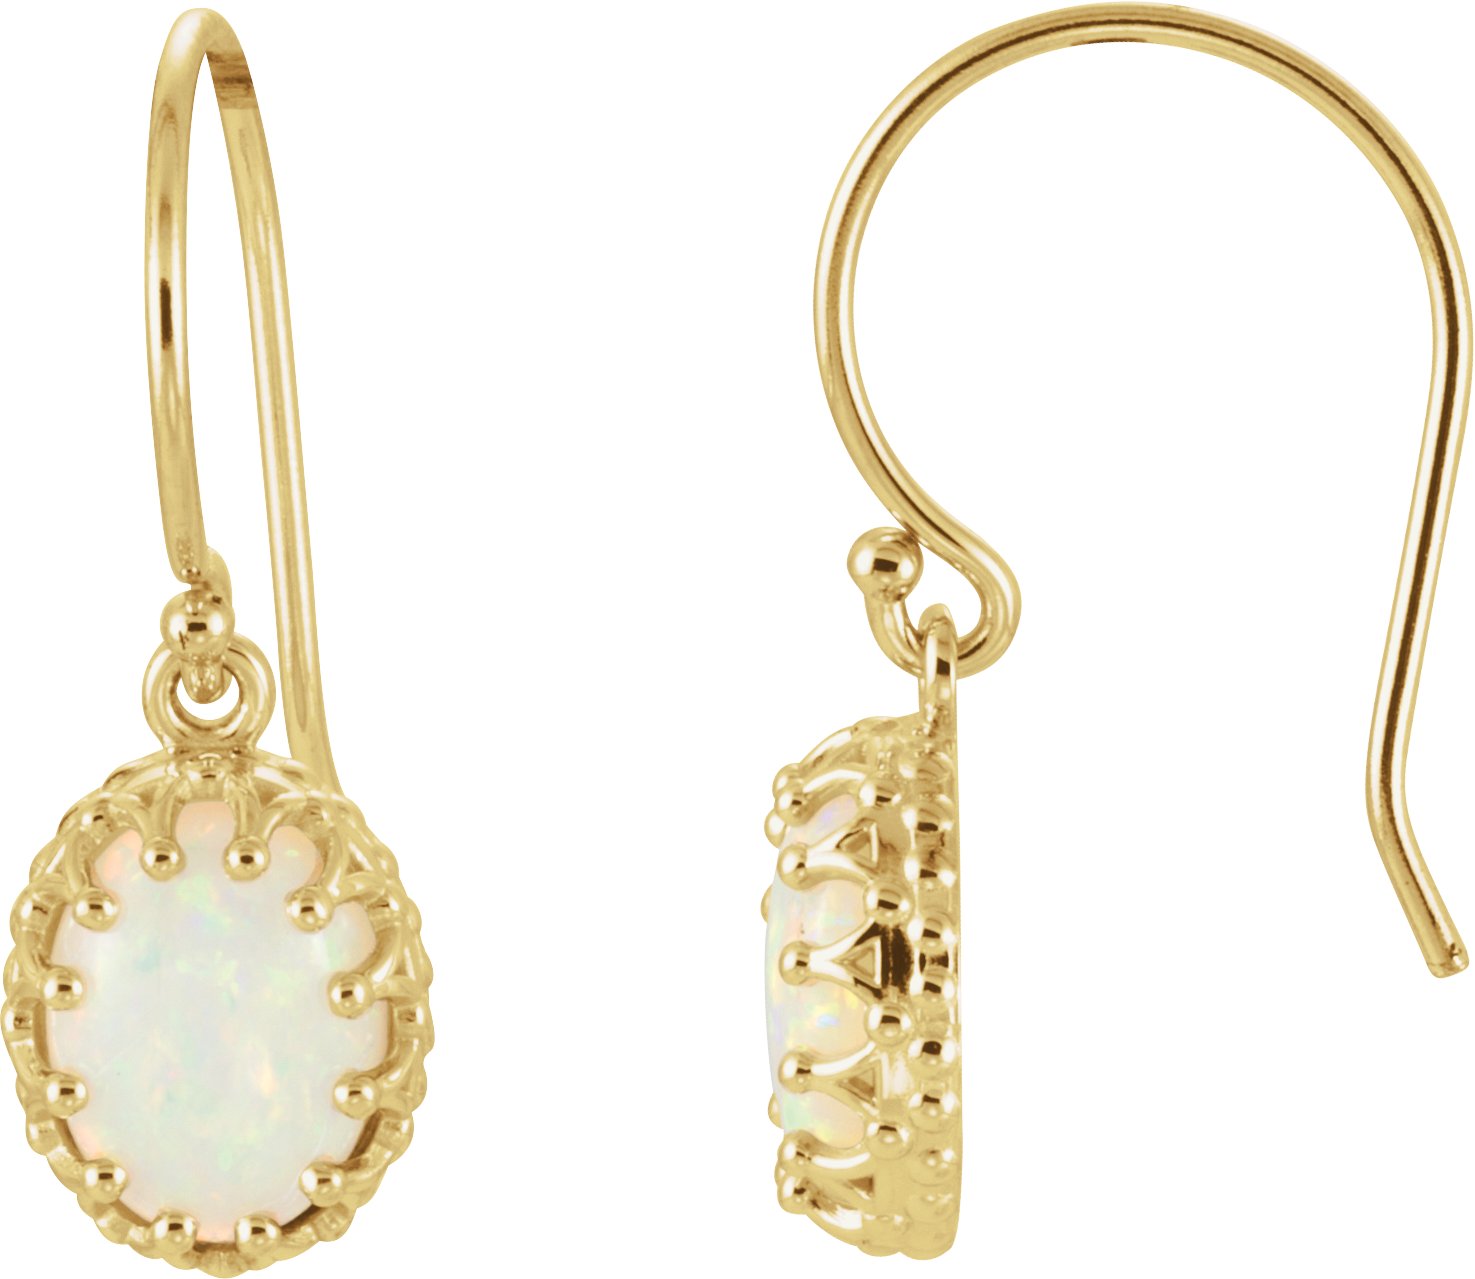 14K Yellow Natural White Opal Earrings